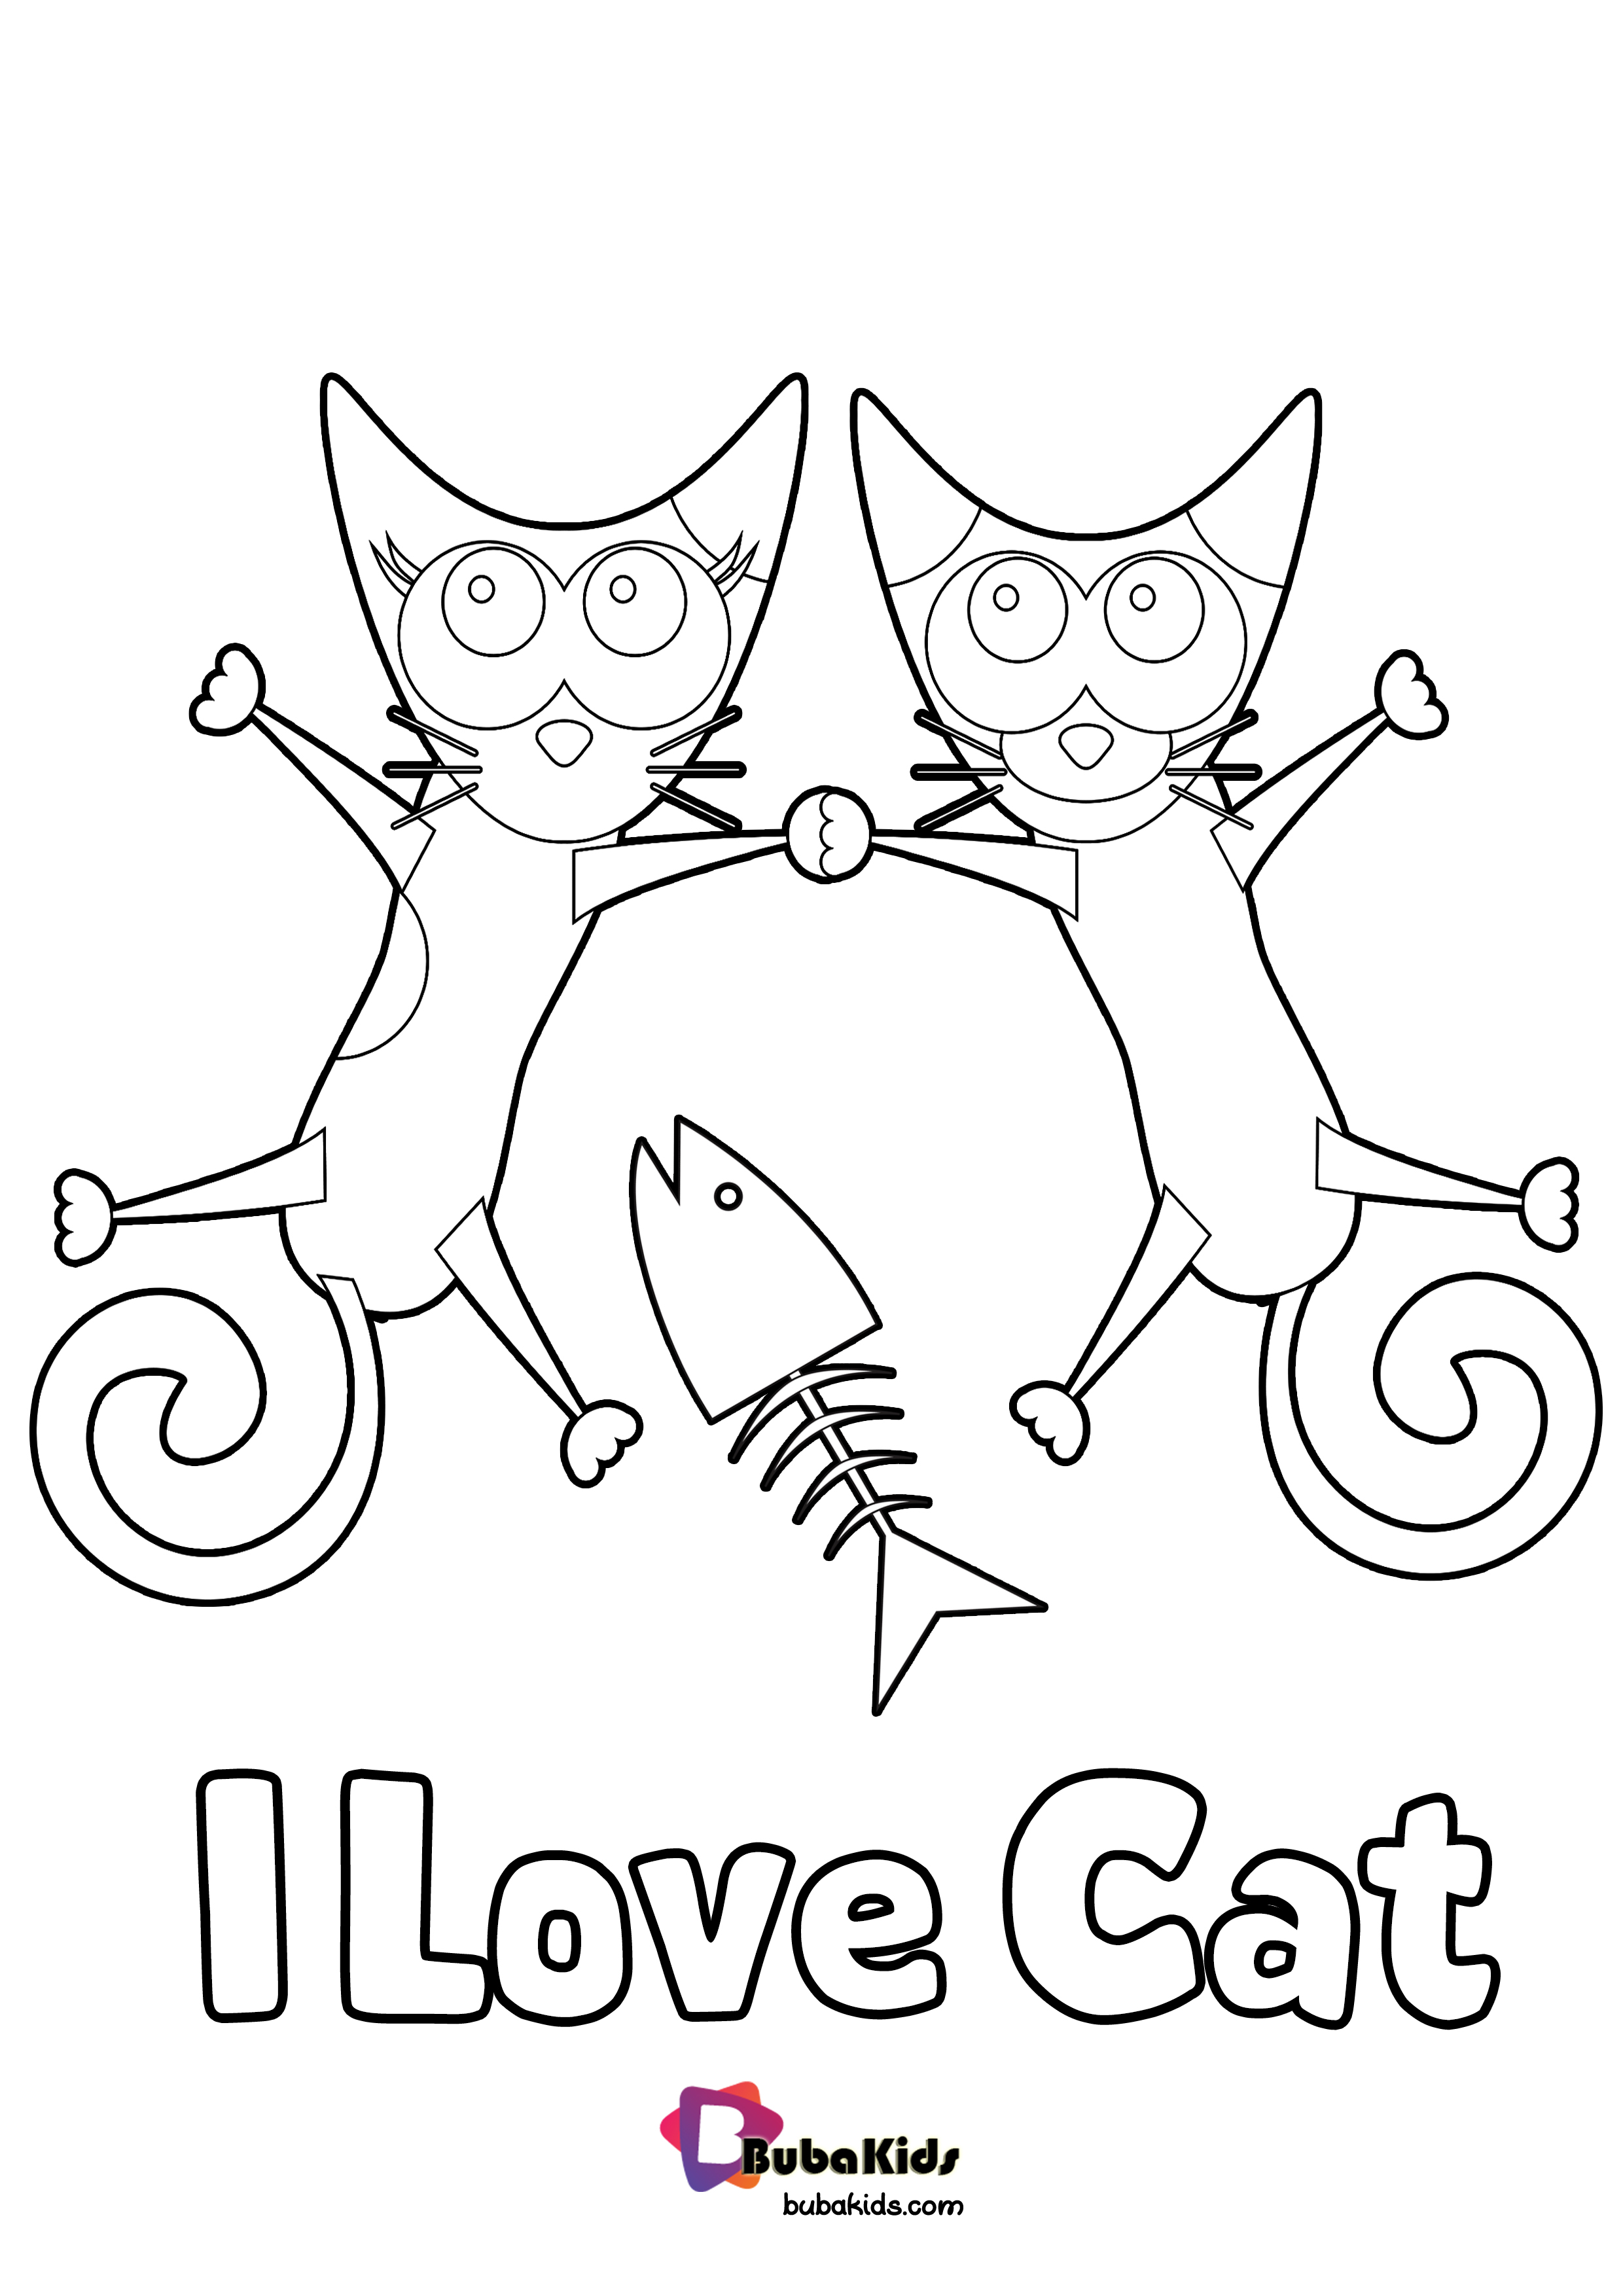 Cute I Love Cat Printable Coloring - BubaKids.com